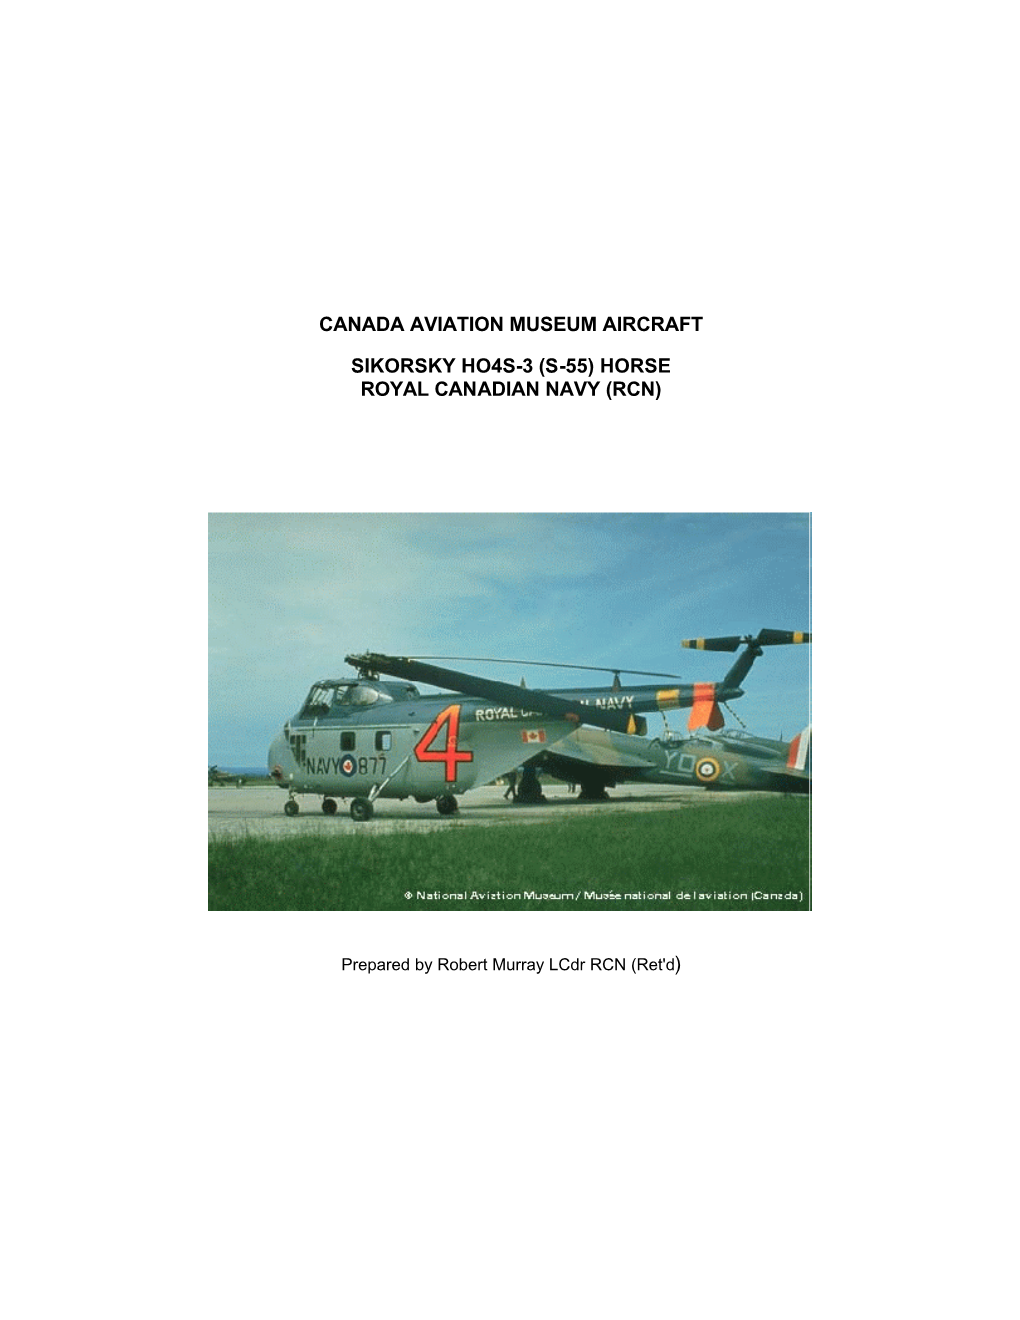 Sikorsky Ho4s-3 (S-55) Horse Royal Canadian Navy (Rcn)